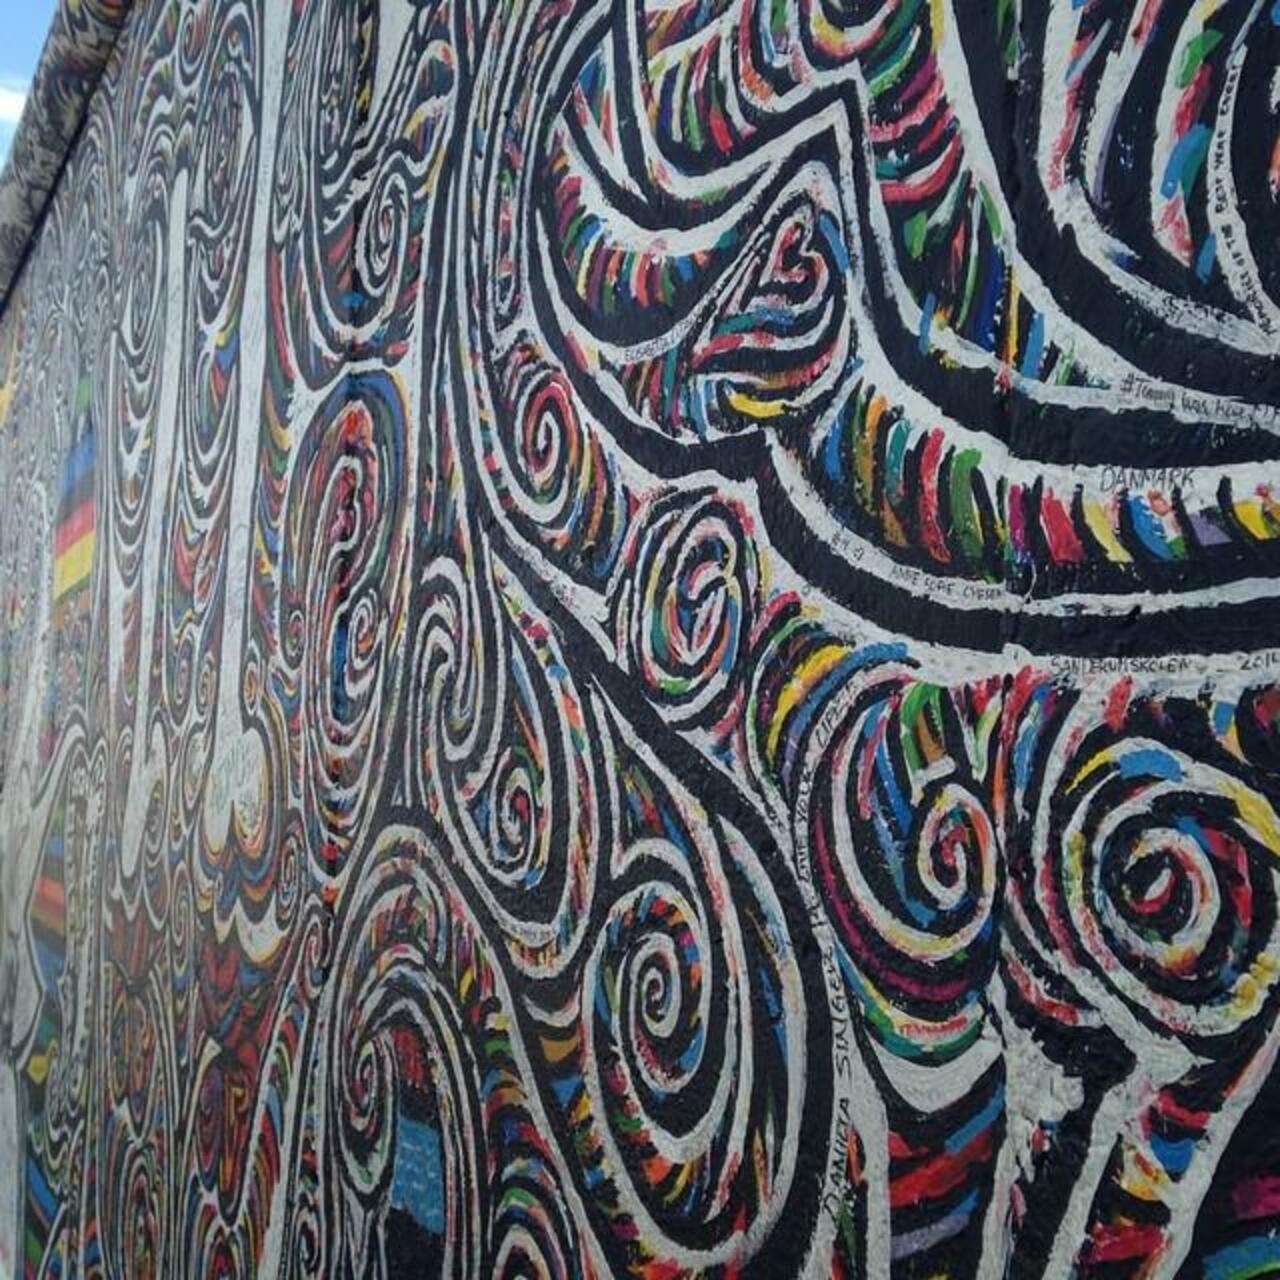 Graffiti on the #berlin wall #art #graffiti by carolina_lou #LCSNY http://t.co/PqvFnl9NaR